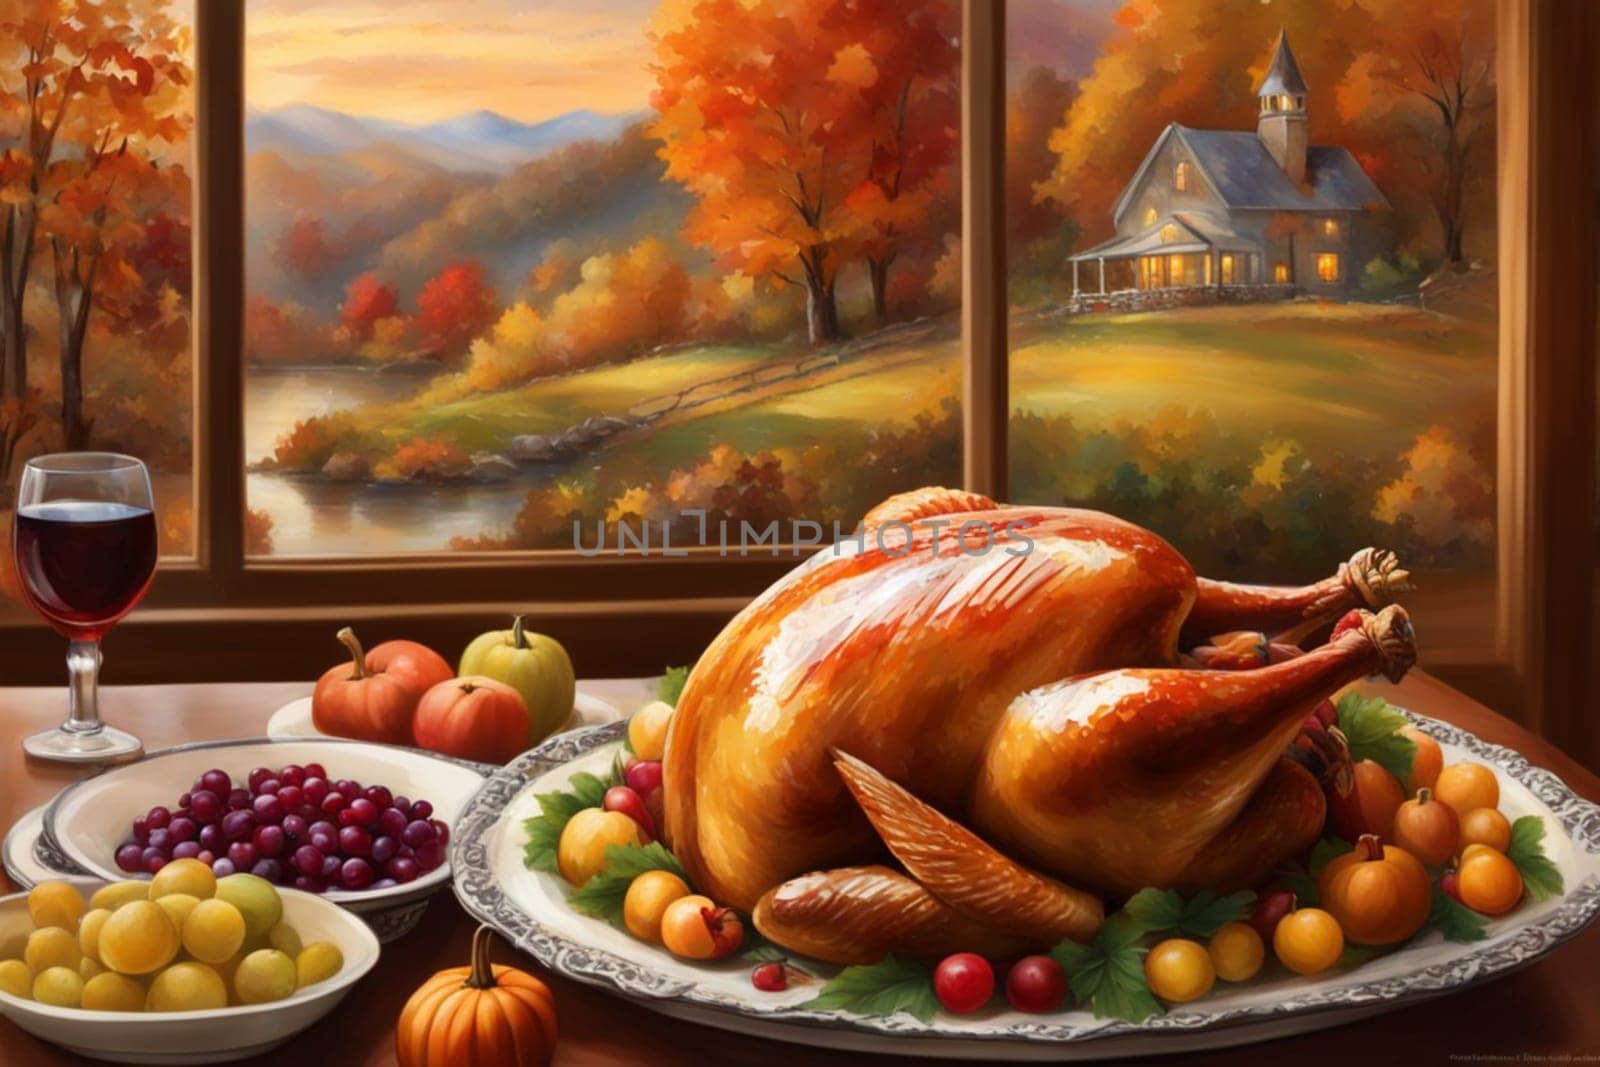 loving family enjoy thanksgiving lunch at the table illustration generative ai art